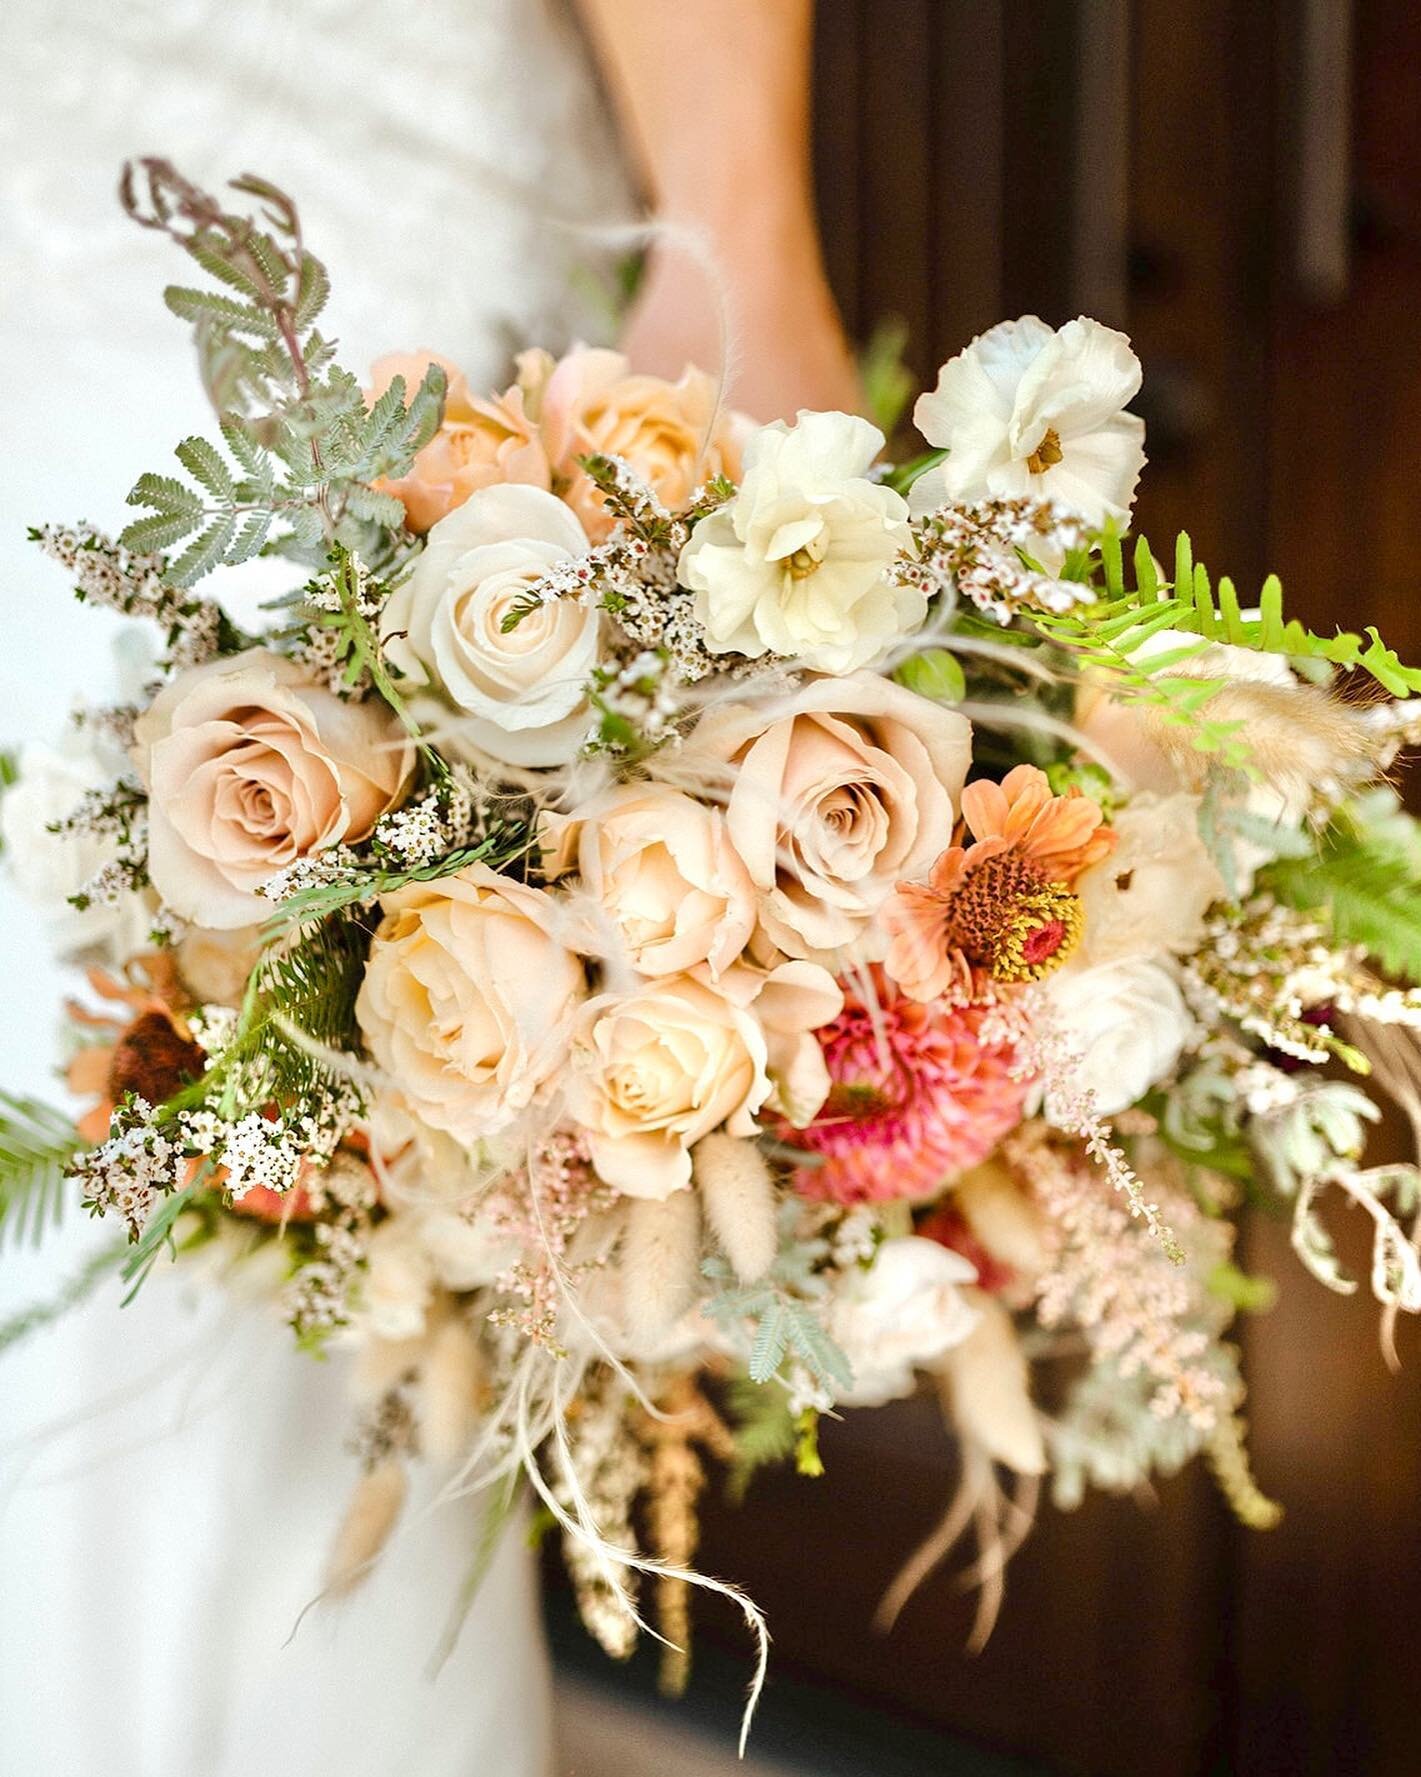 Bridal details have our hearts🤍

Floral Lead: @better_together_marcy 
Photographer: @mattwilkeyphoto 

#atlantabride #georgiabride #atlantawedding #citywedding #georgiawedding #atl #atlanta #atlantaflorist #georgiaflorist #engaged #bouquet #bridalbo